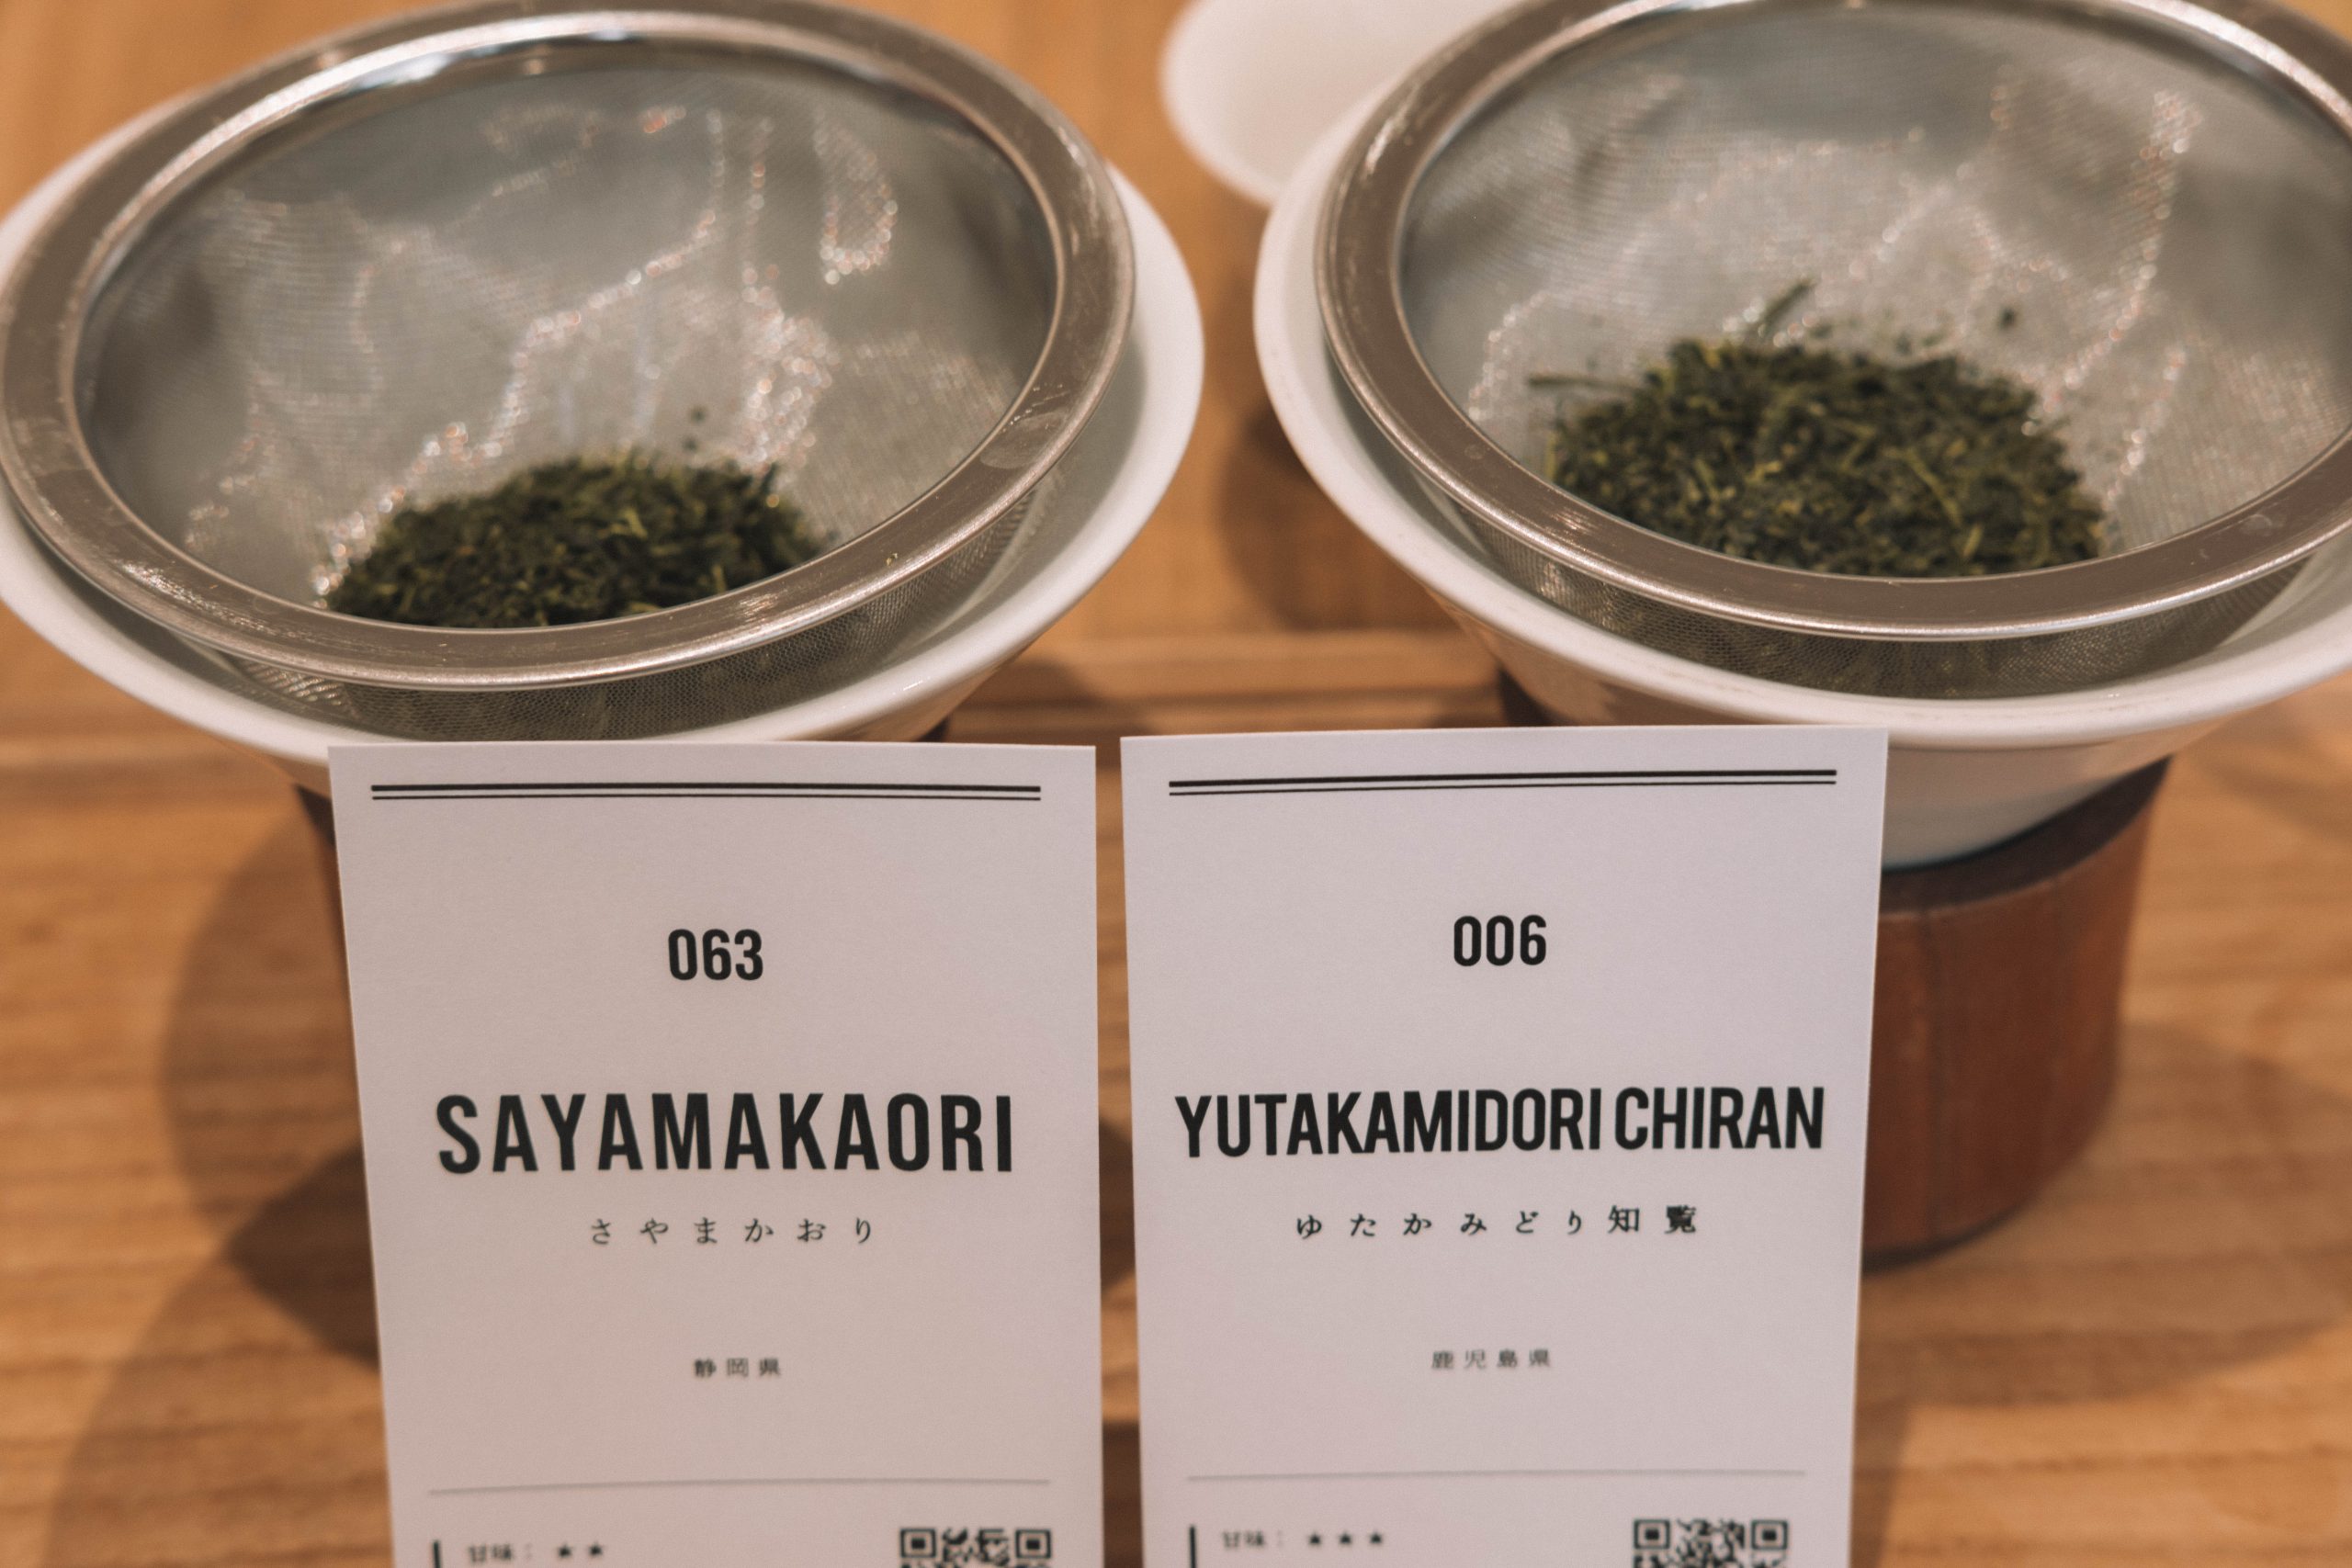 My picks for tea at Tokyo Sanryo